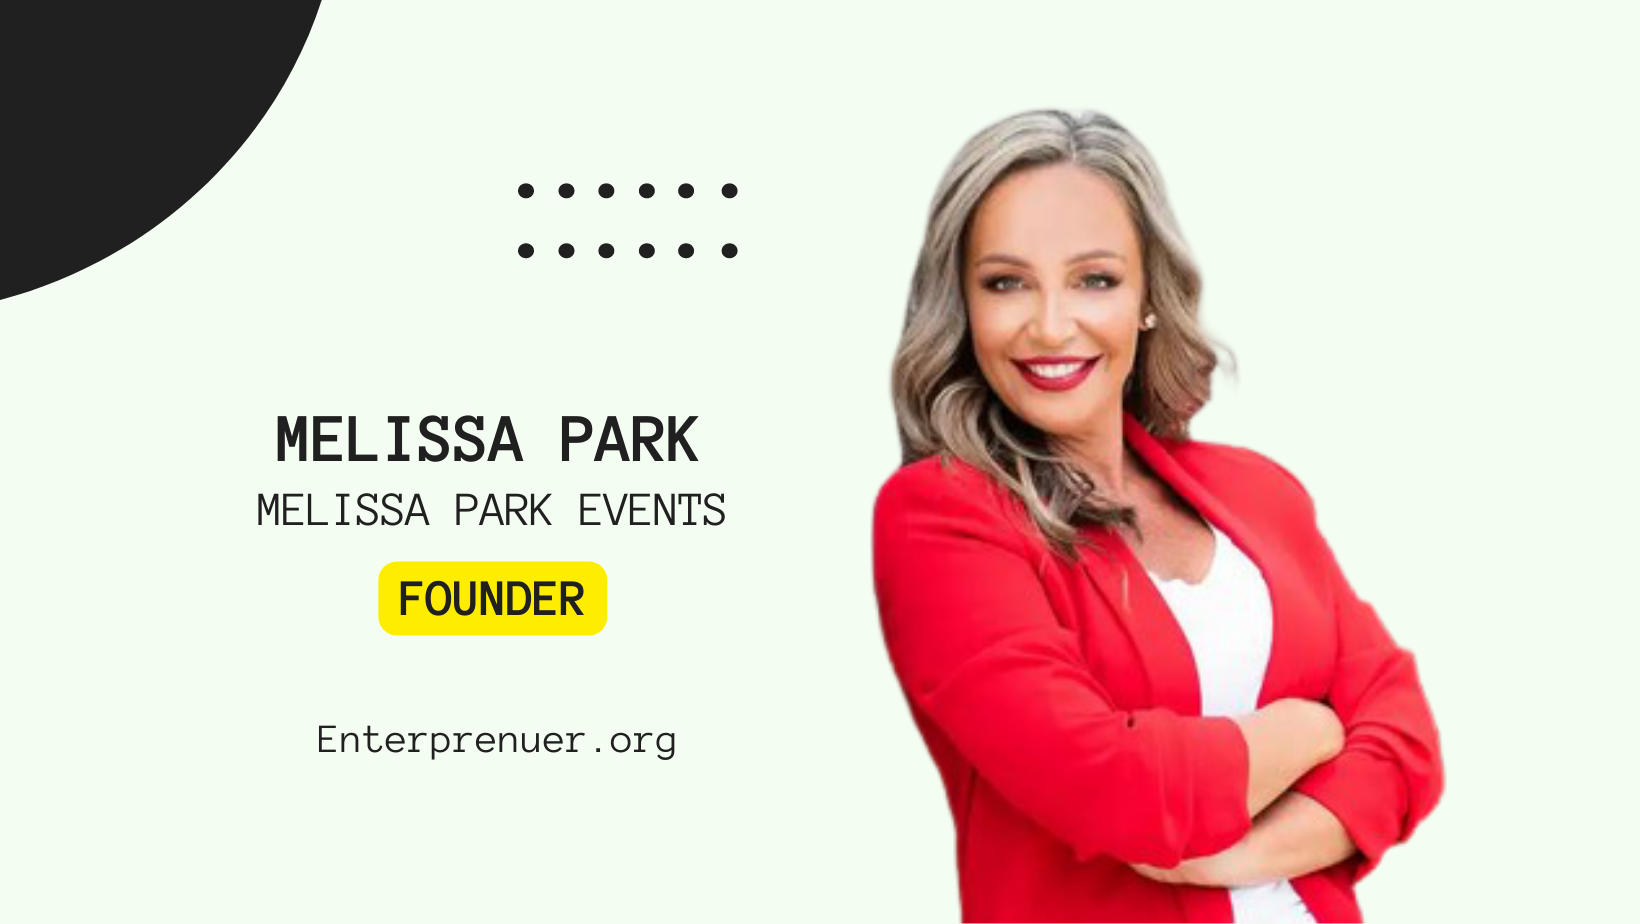 Melissa Park Founder of Melissa Park Events